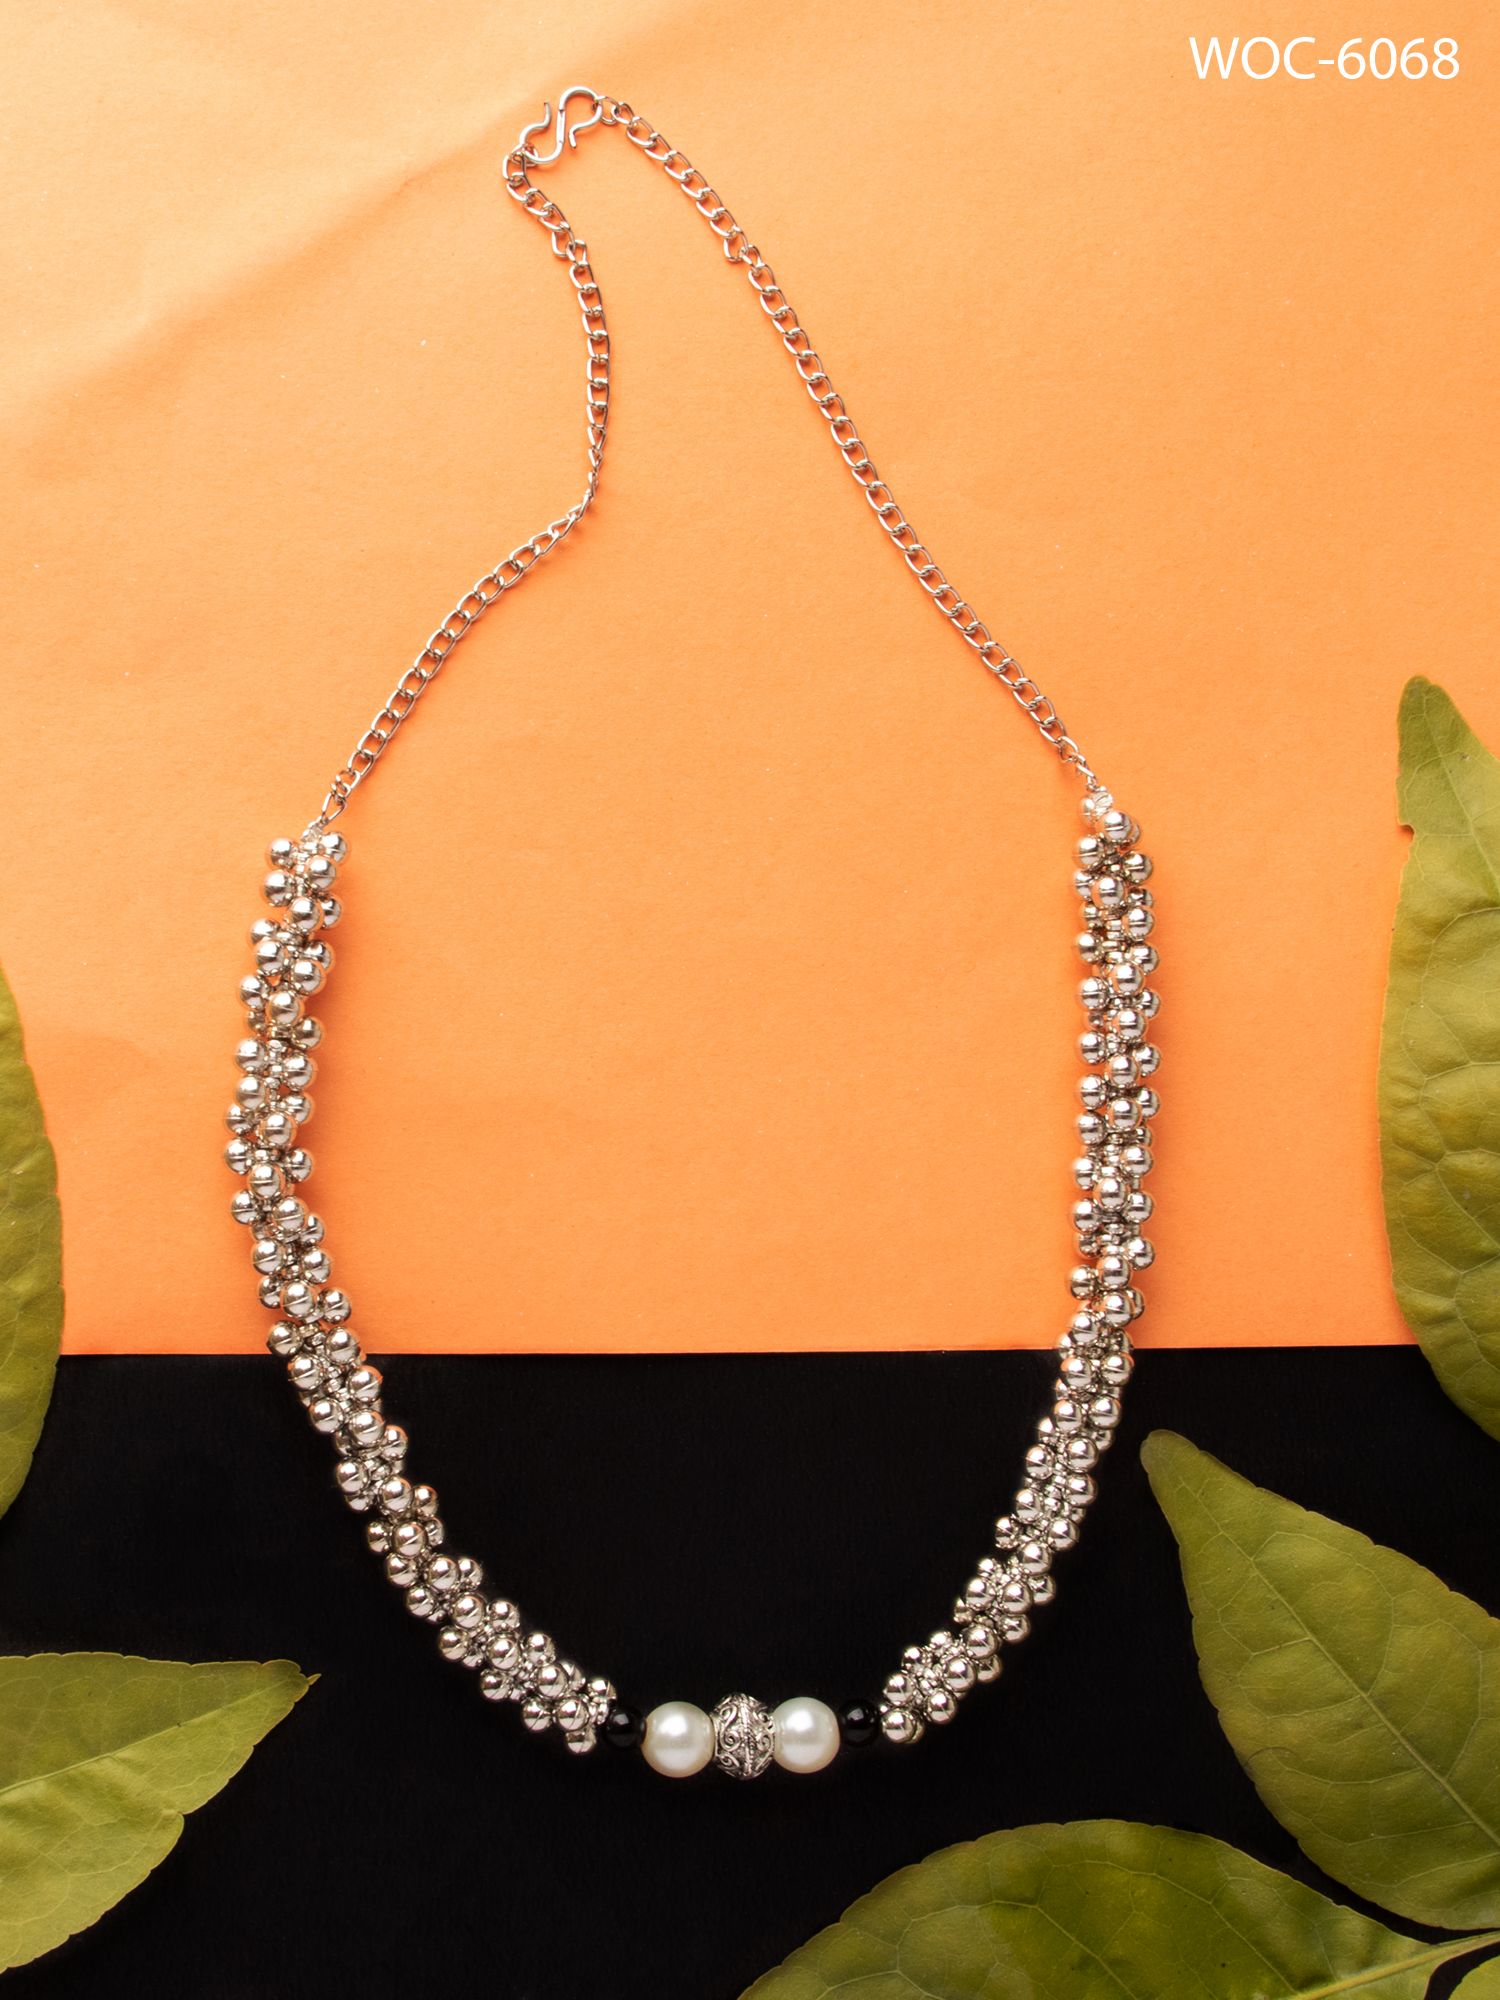 Oxidised ghungroo necklace